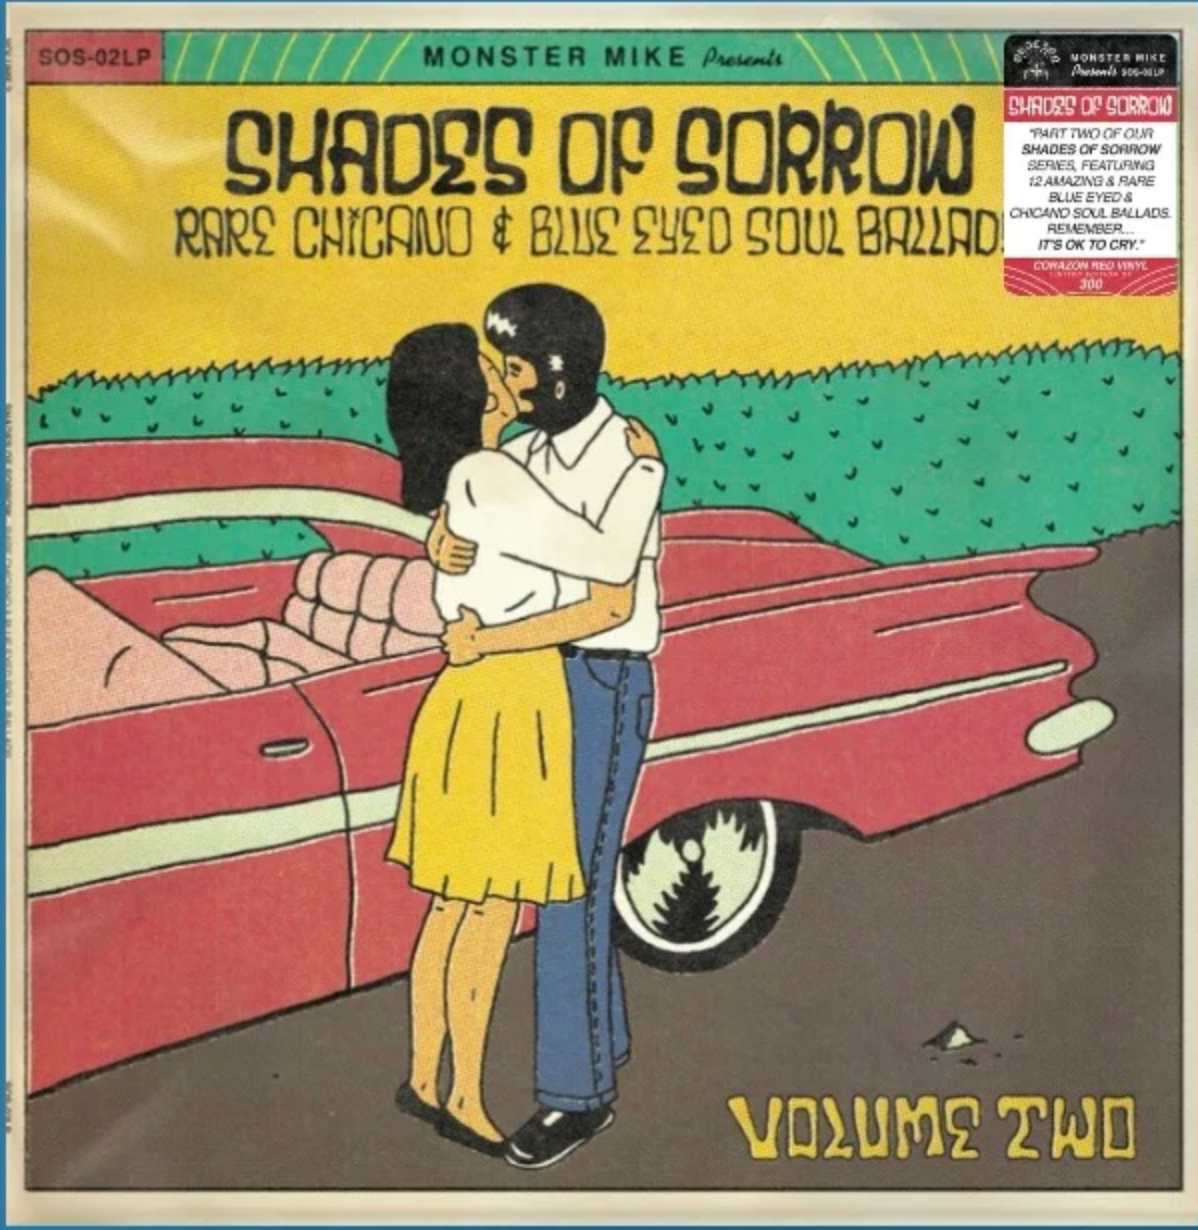 VARIOUS ARTISTS: SHADES OF SORROW - VOLUME 2 Vinyl LP